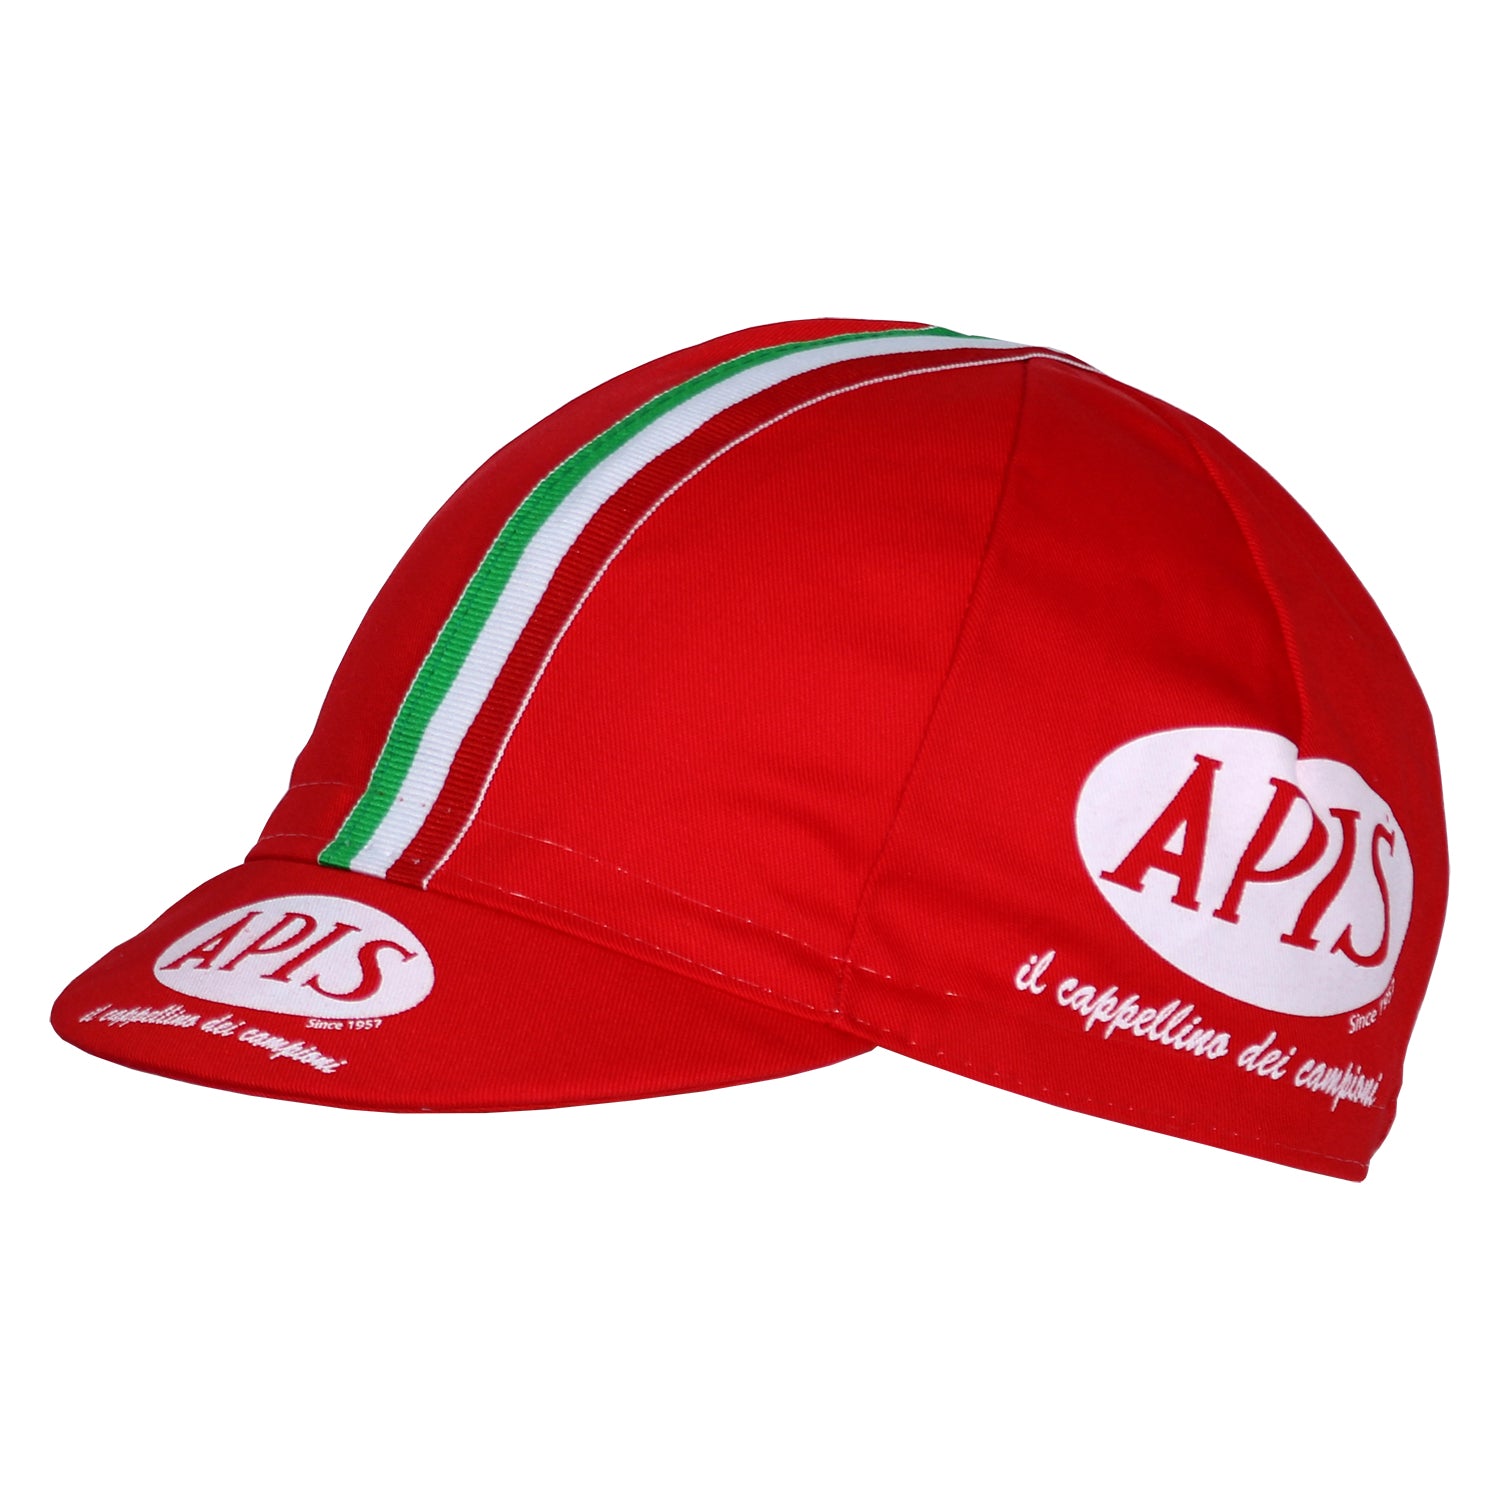 Red / Italian Cycling Cap